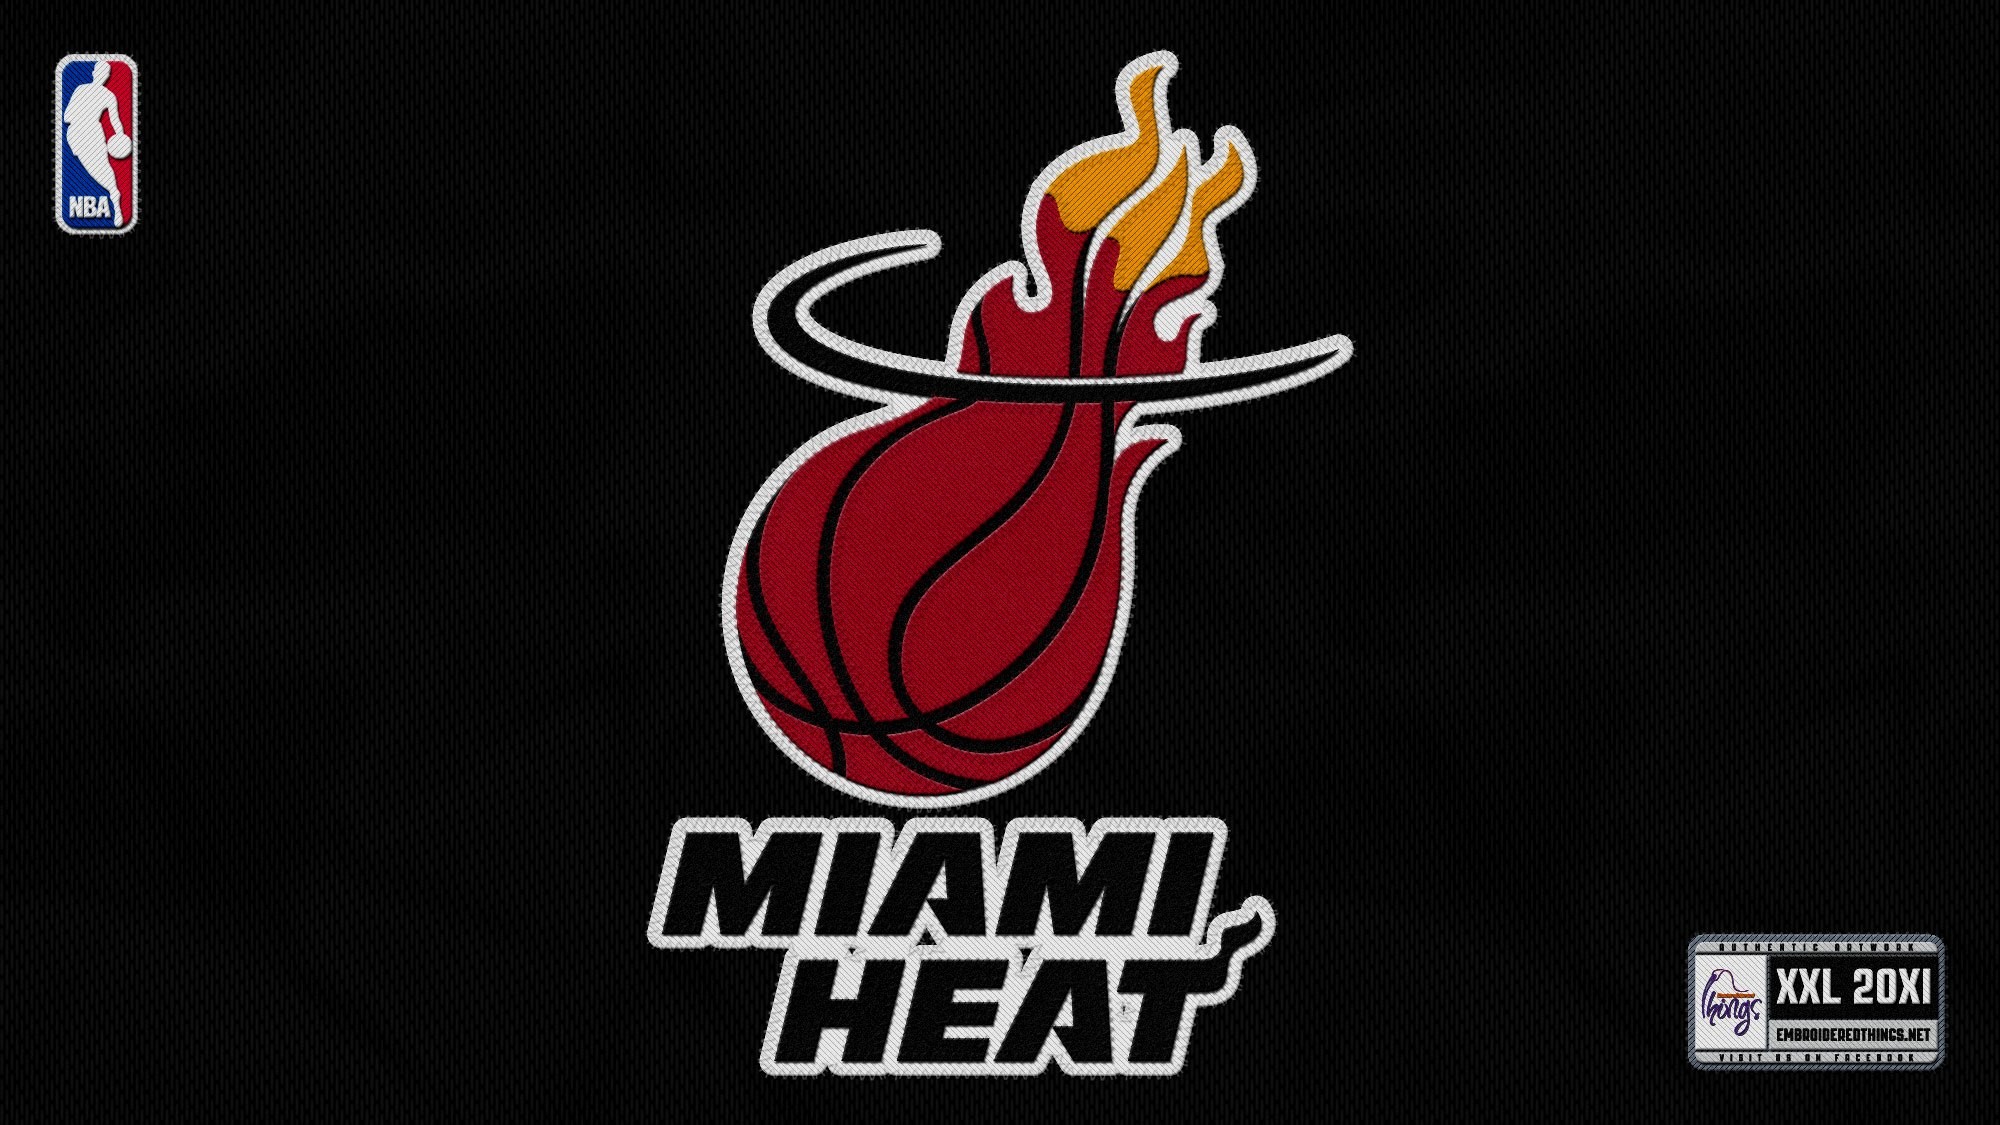 2000x1125 Miami Heat NBA Logo | wallpapers55.com - Best Wallpapers for PCs .